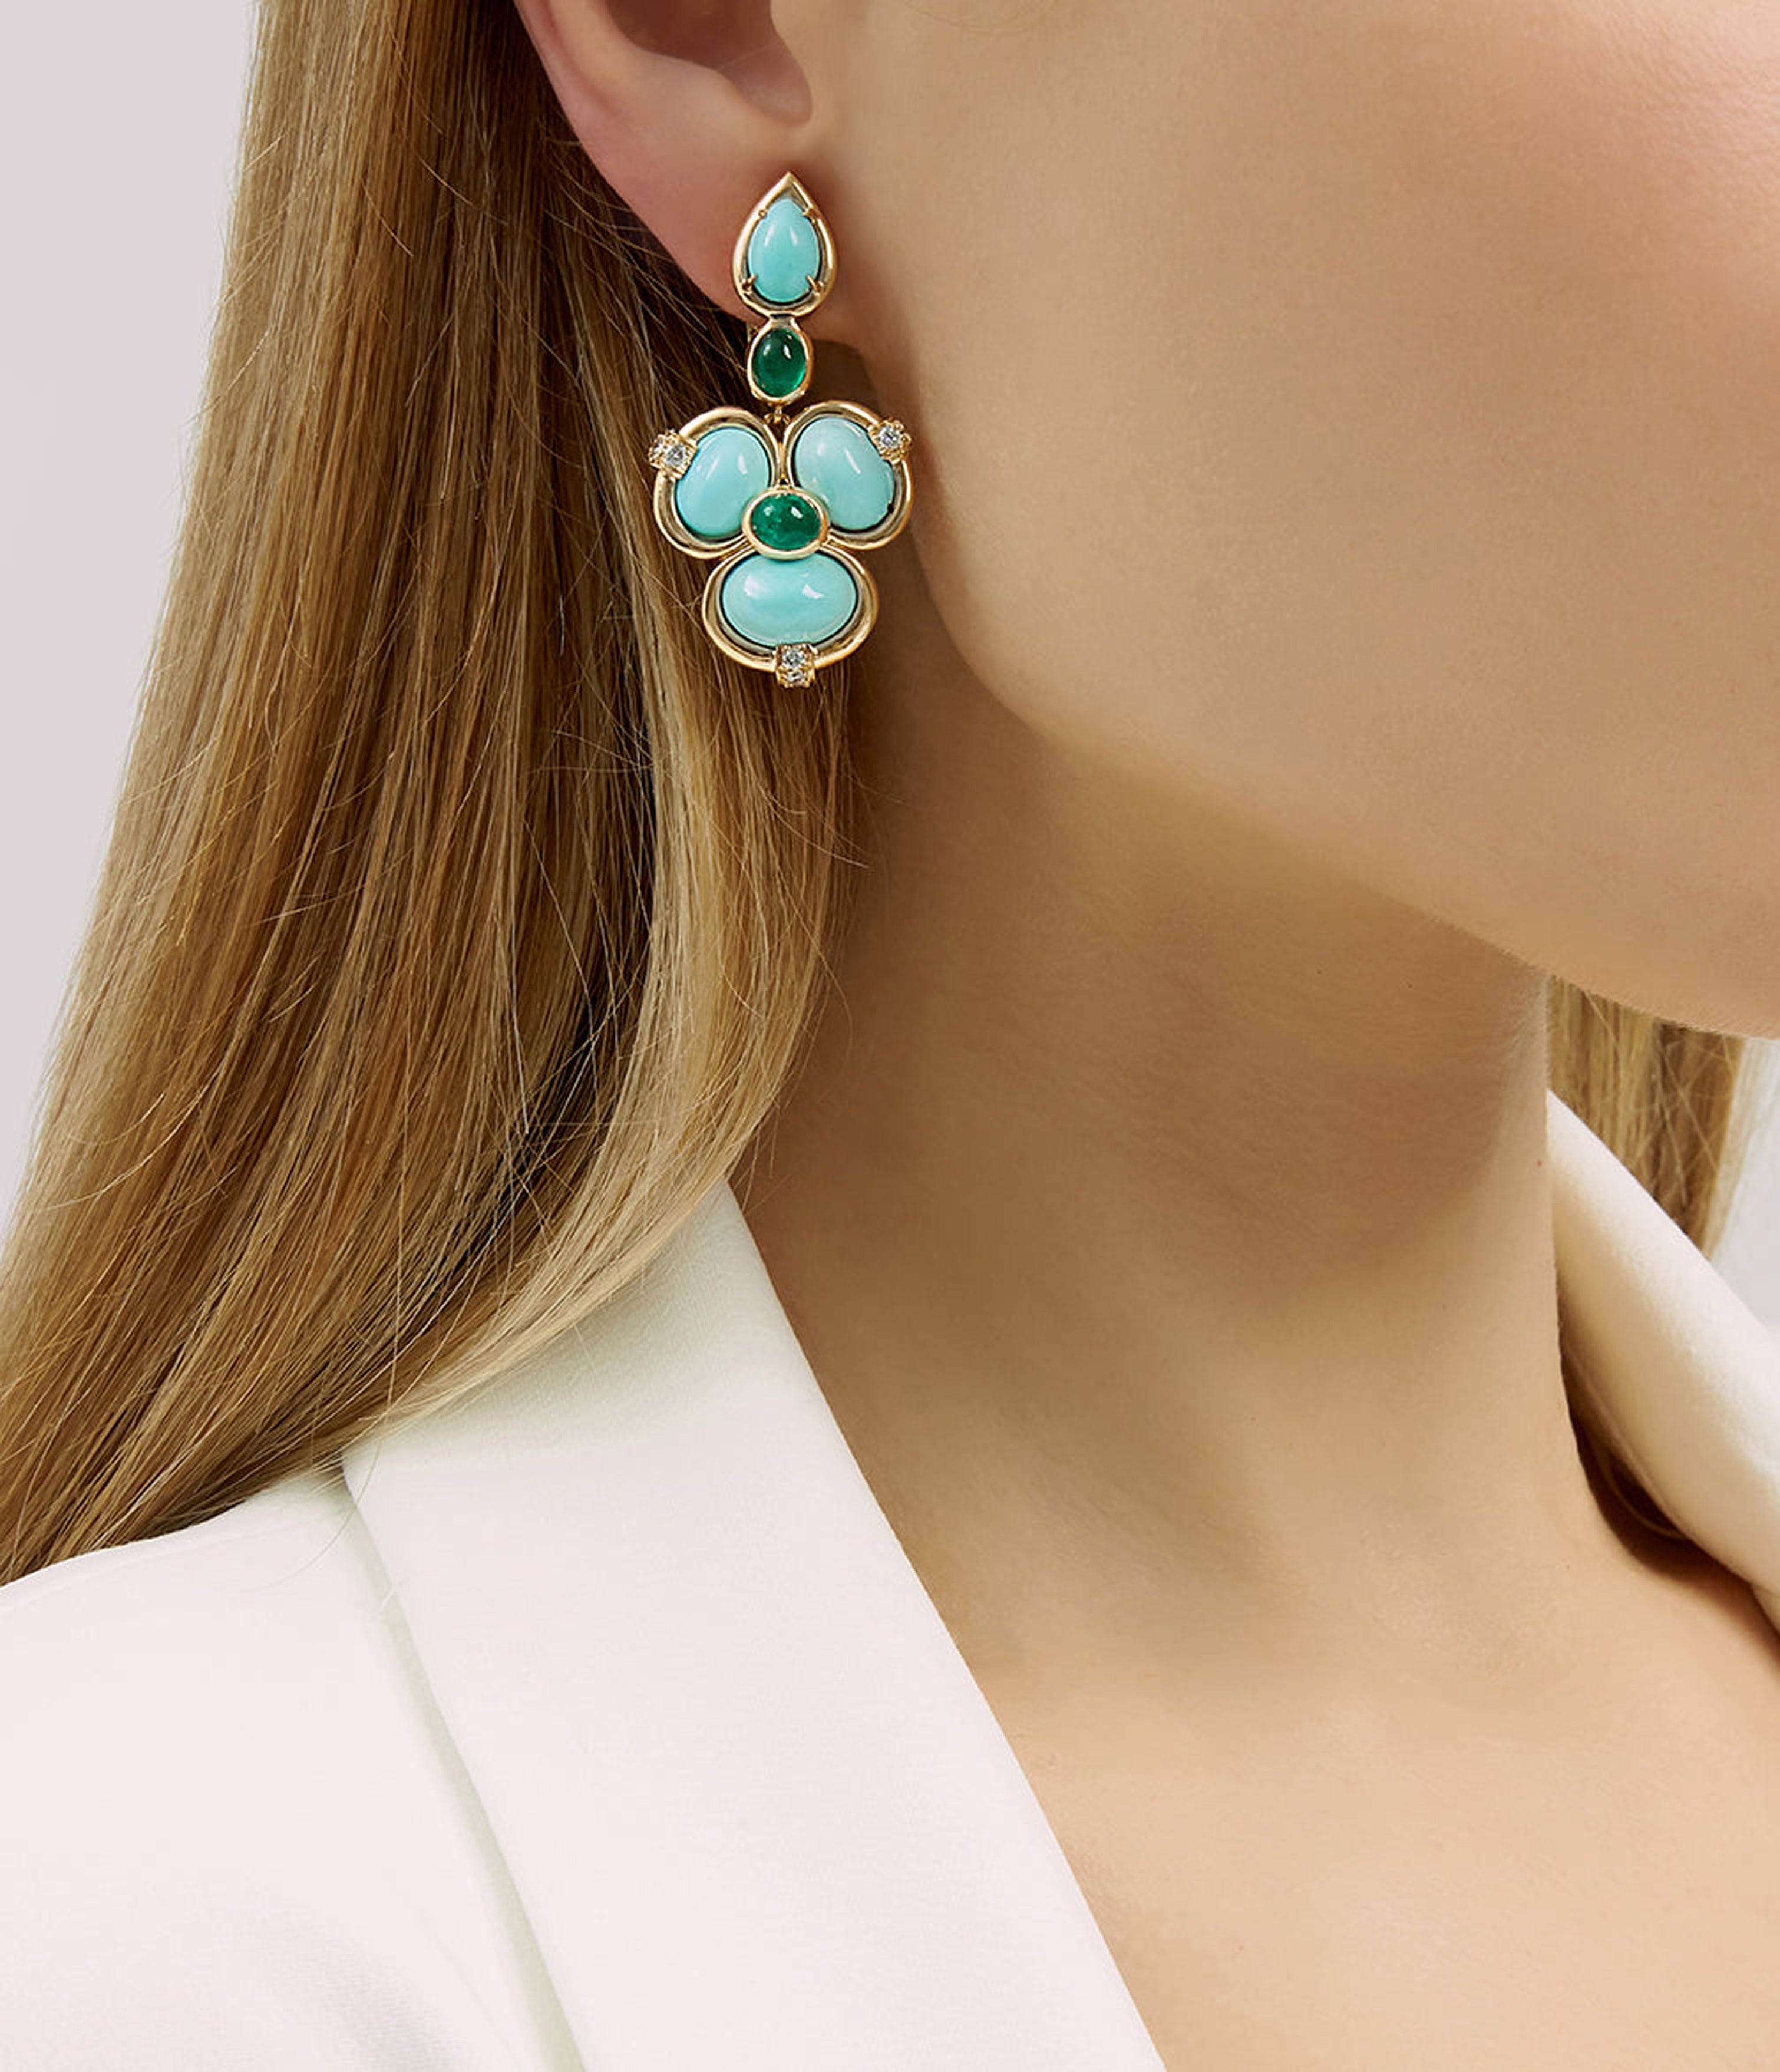 Pagoda Tassel Earrings with Diamonds, Emerald and Coral Beads | Coral  earrings, Tassel earrings, Earrings